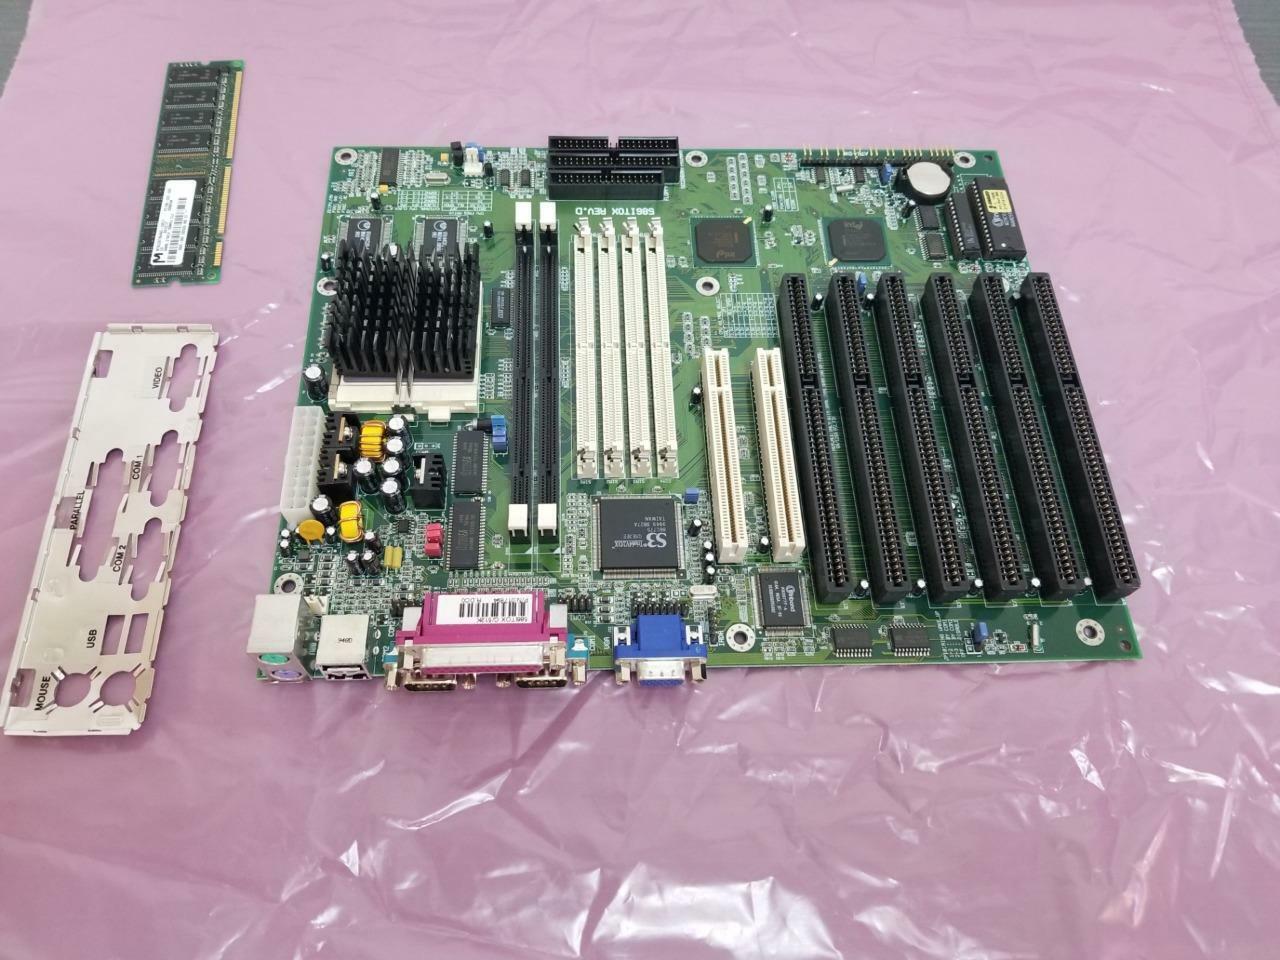 DFI 586ITOX System Board Motherboard Socket 7 w/ AMD K6 2/300 CPU 64MB IO Shield